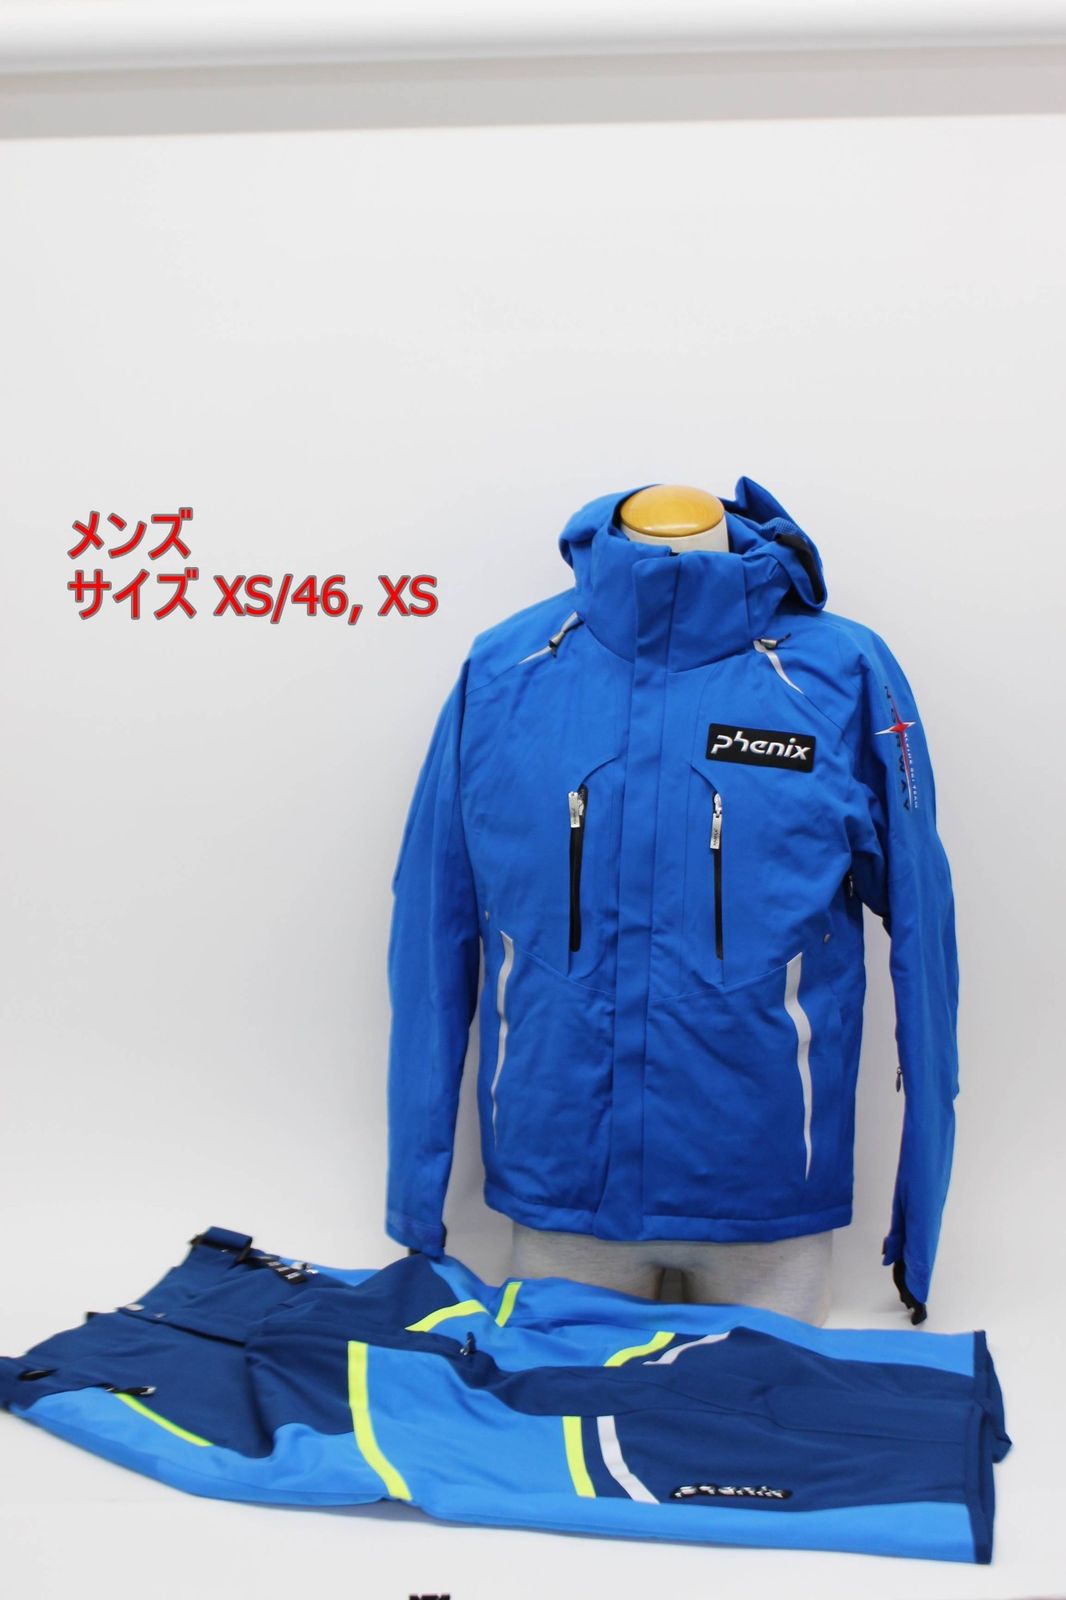 Phenix メンズ スキージャケット&パンツ 上下 ブルー×ネイビー XS/46 